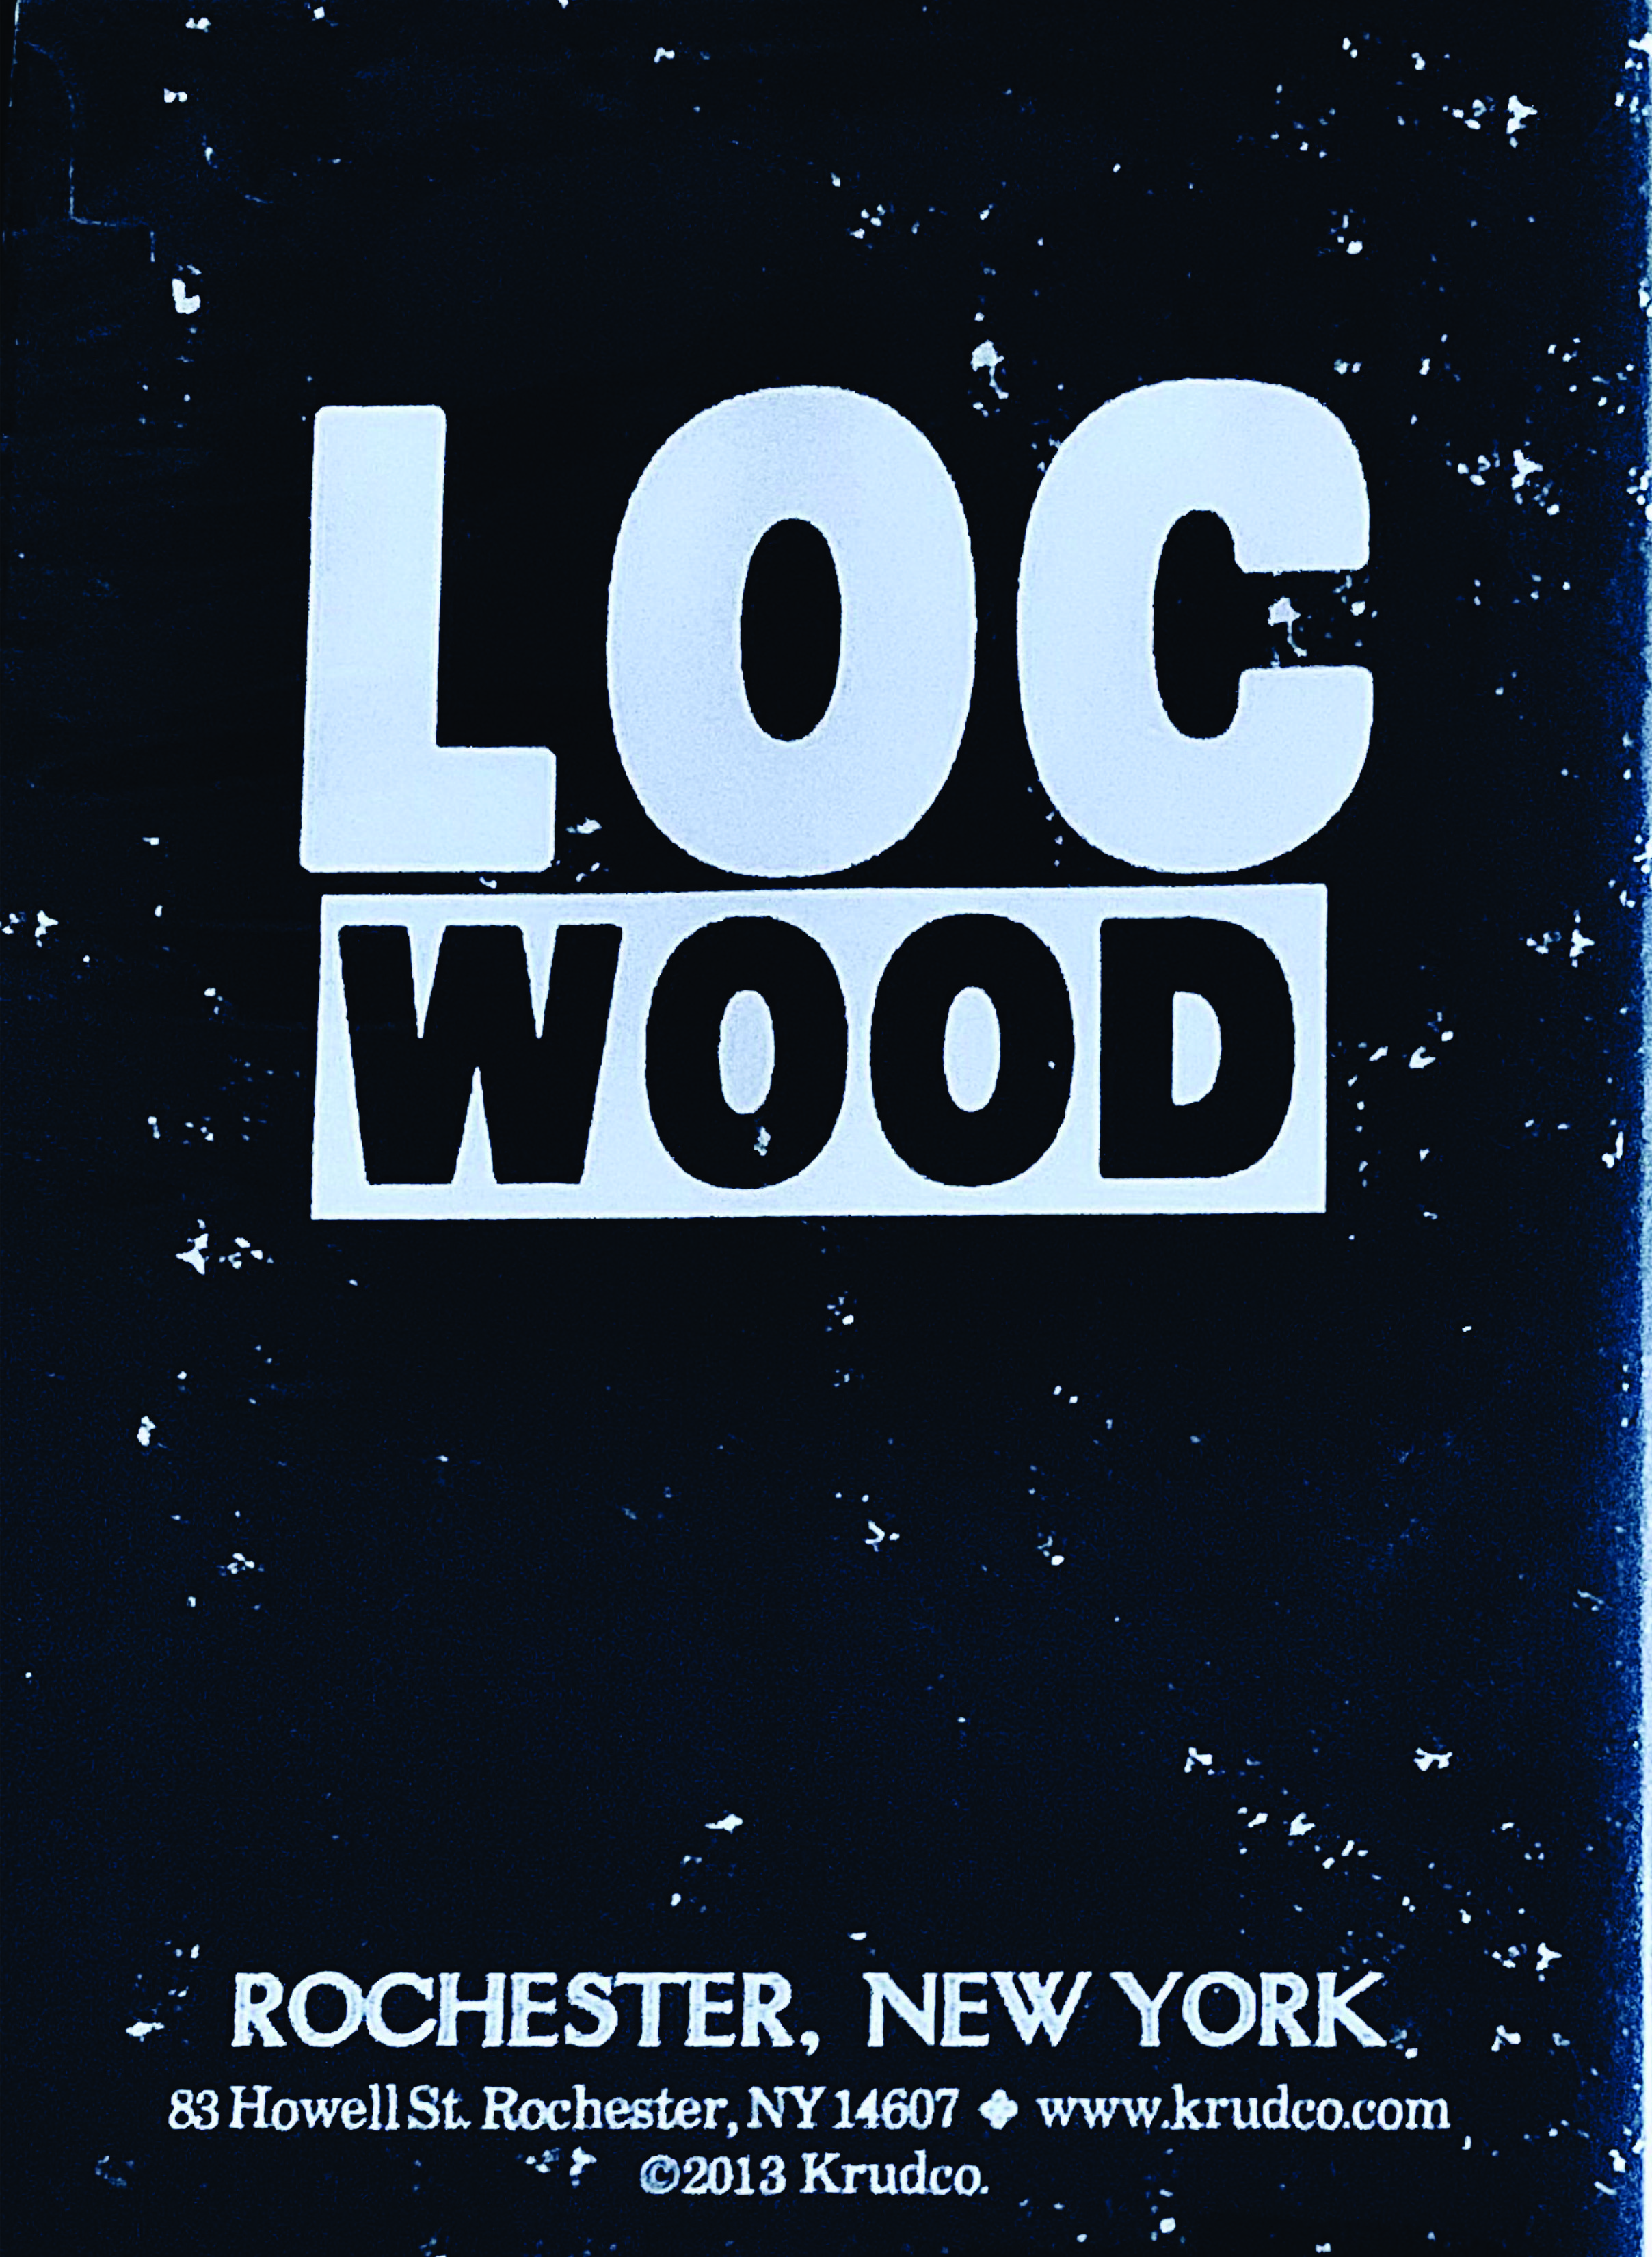 LOCwood - Word Is Bond cover